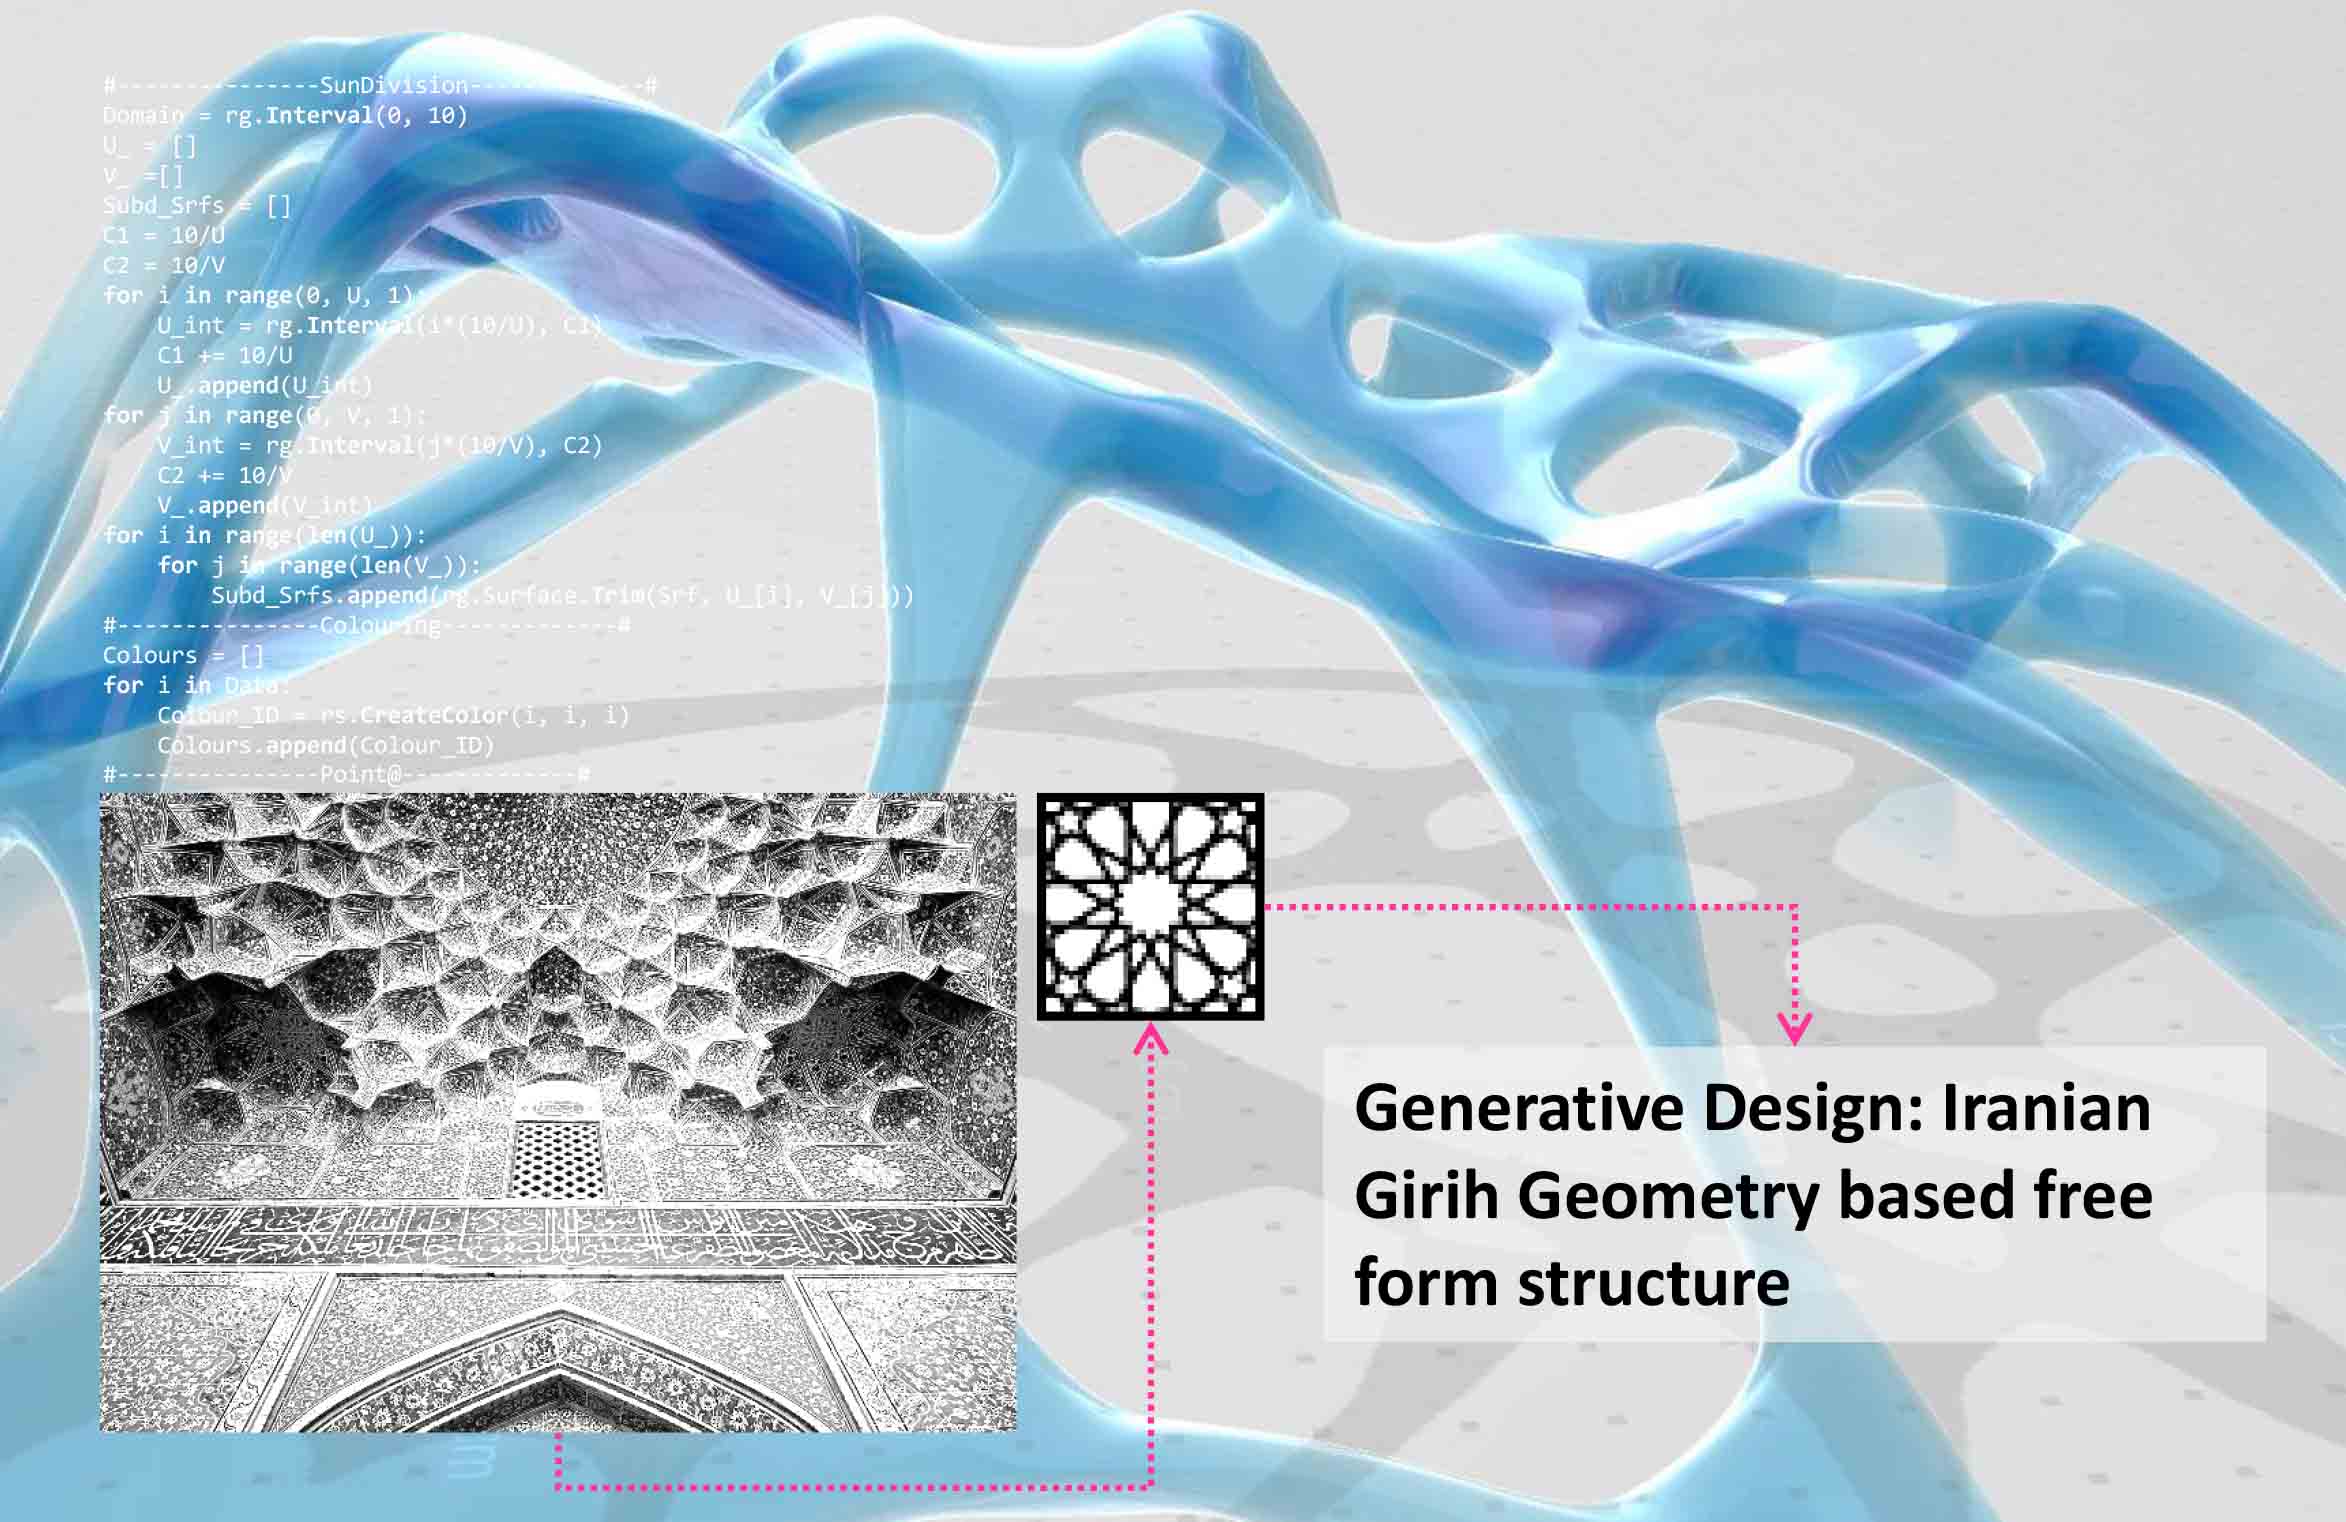 Iranian Girih Geometry based Generative FreeForm Structural Design